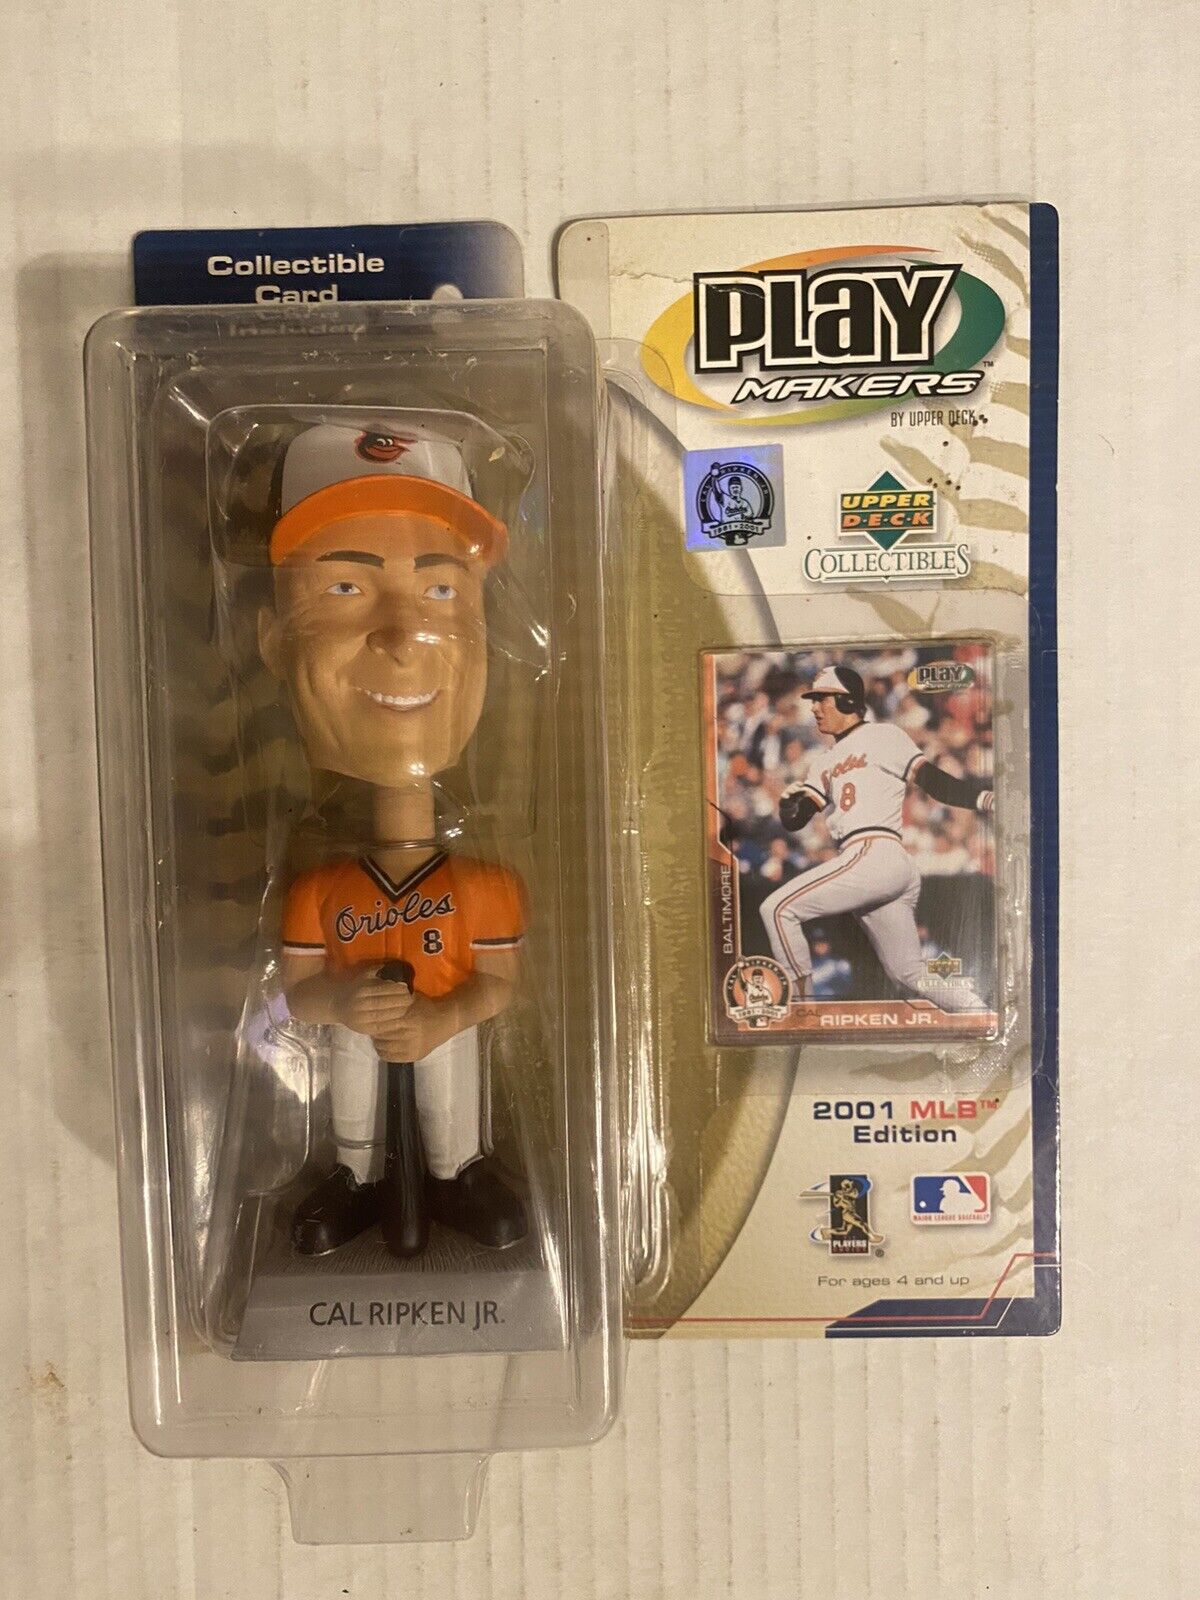 Play Makers Upper Deck 2001 MLB Edition Cal Ripken Jr Bobblehead Orioles Orange